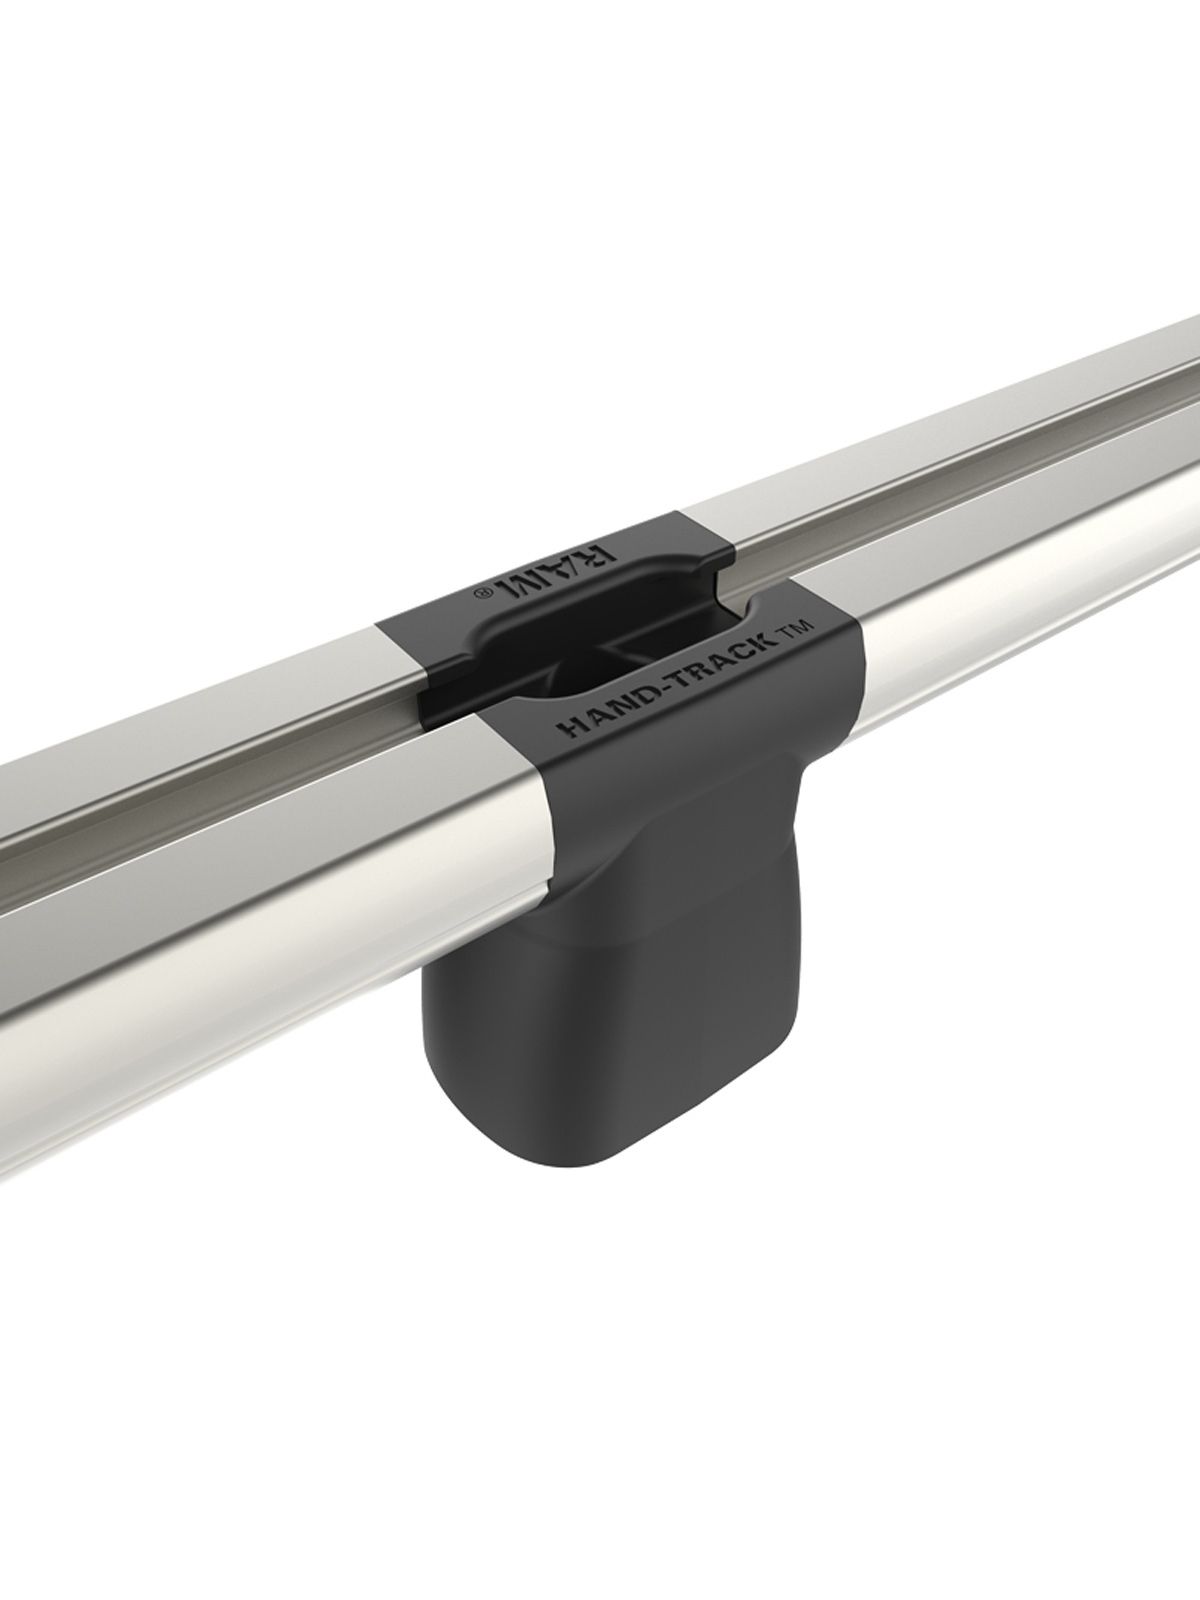 RAM Mounts Hand-Track Erweiterung - Aluminium-Schiene inkl. Steckverbindung, Innenlänge 152,4 mm (6 Zoll), eloxiert